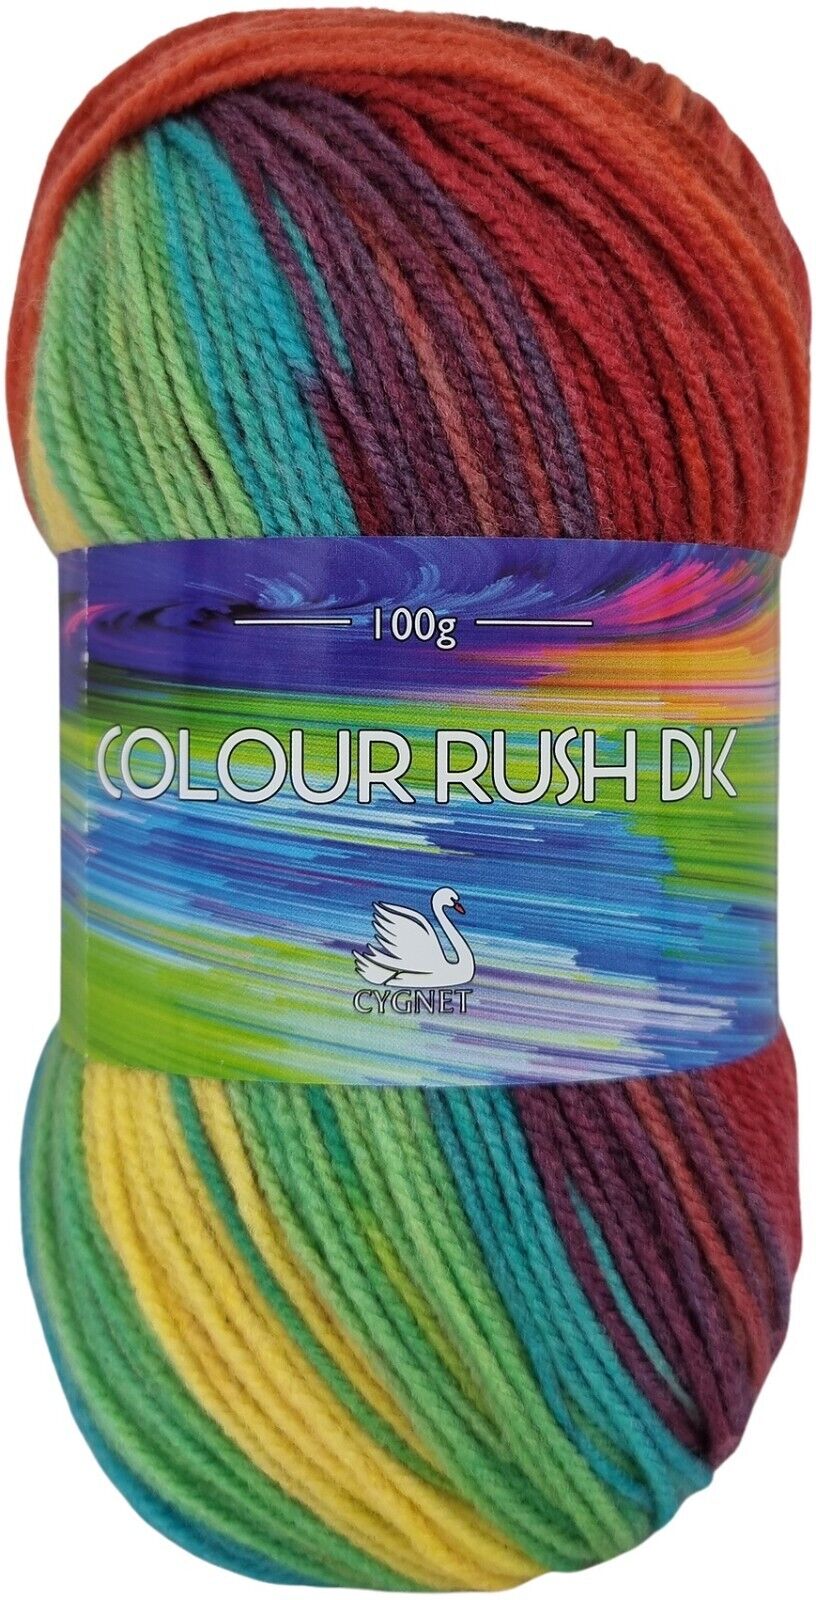 Cygnet COLOUR RUSH DK Knitting Yarn / Wool - 100g Double Knit Ball - Firebrick